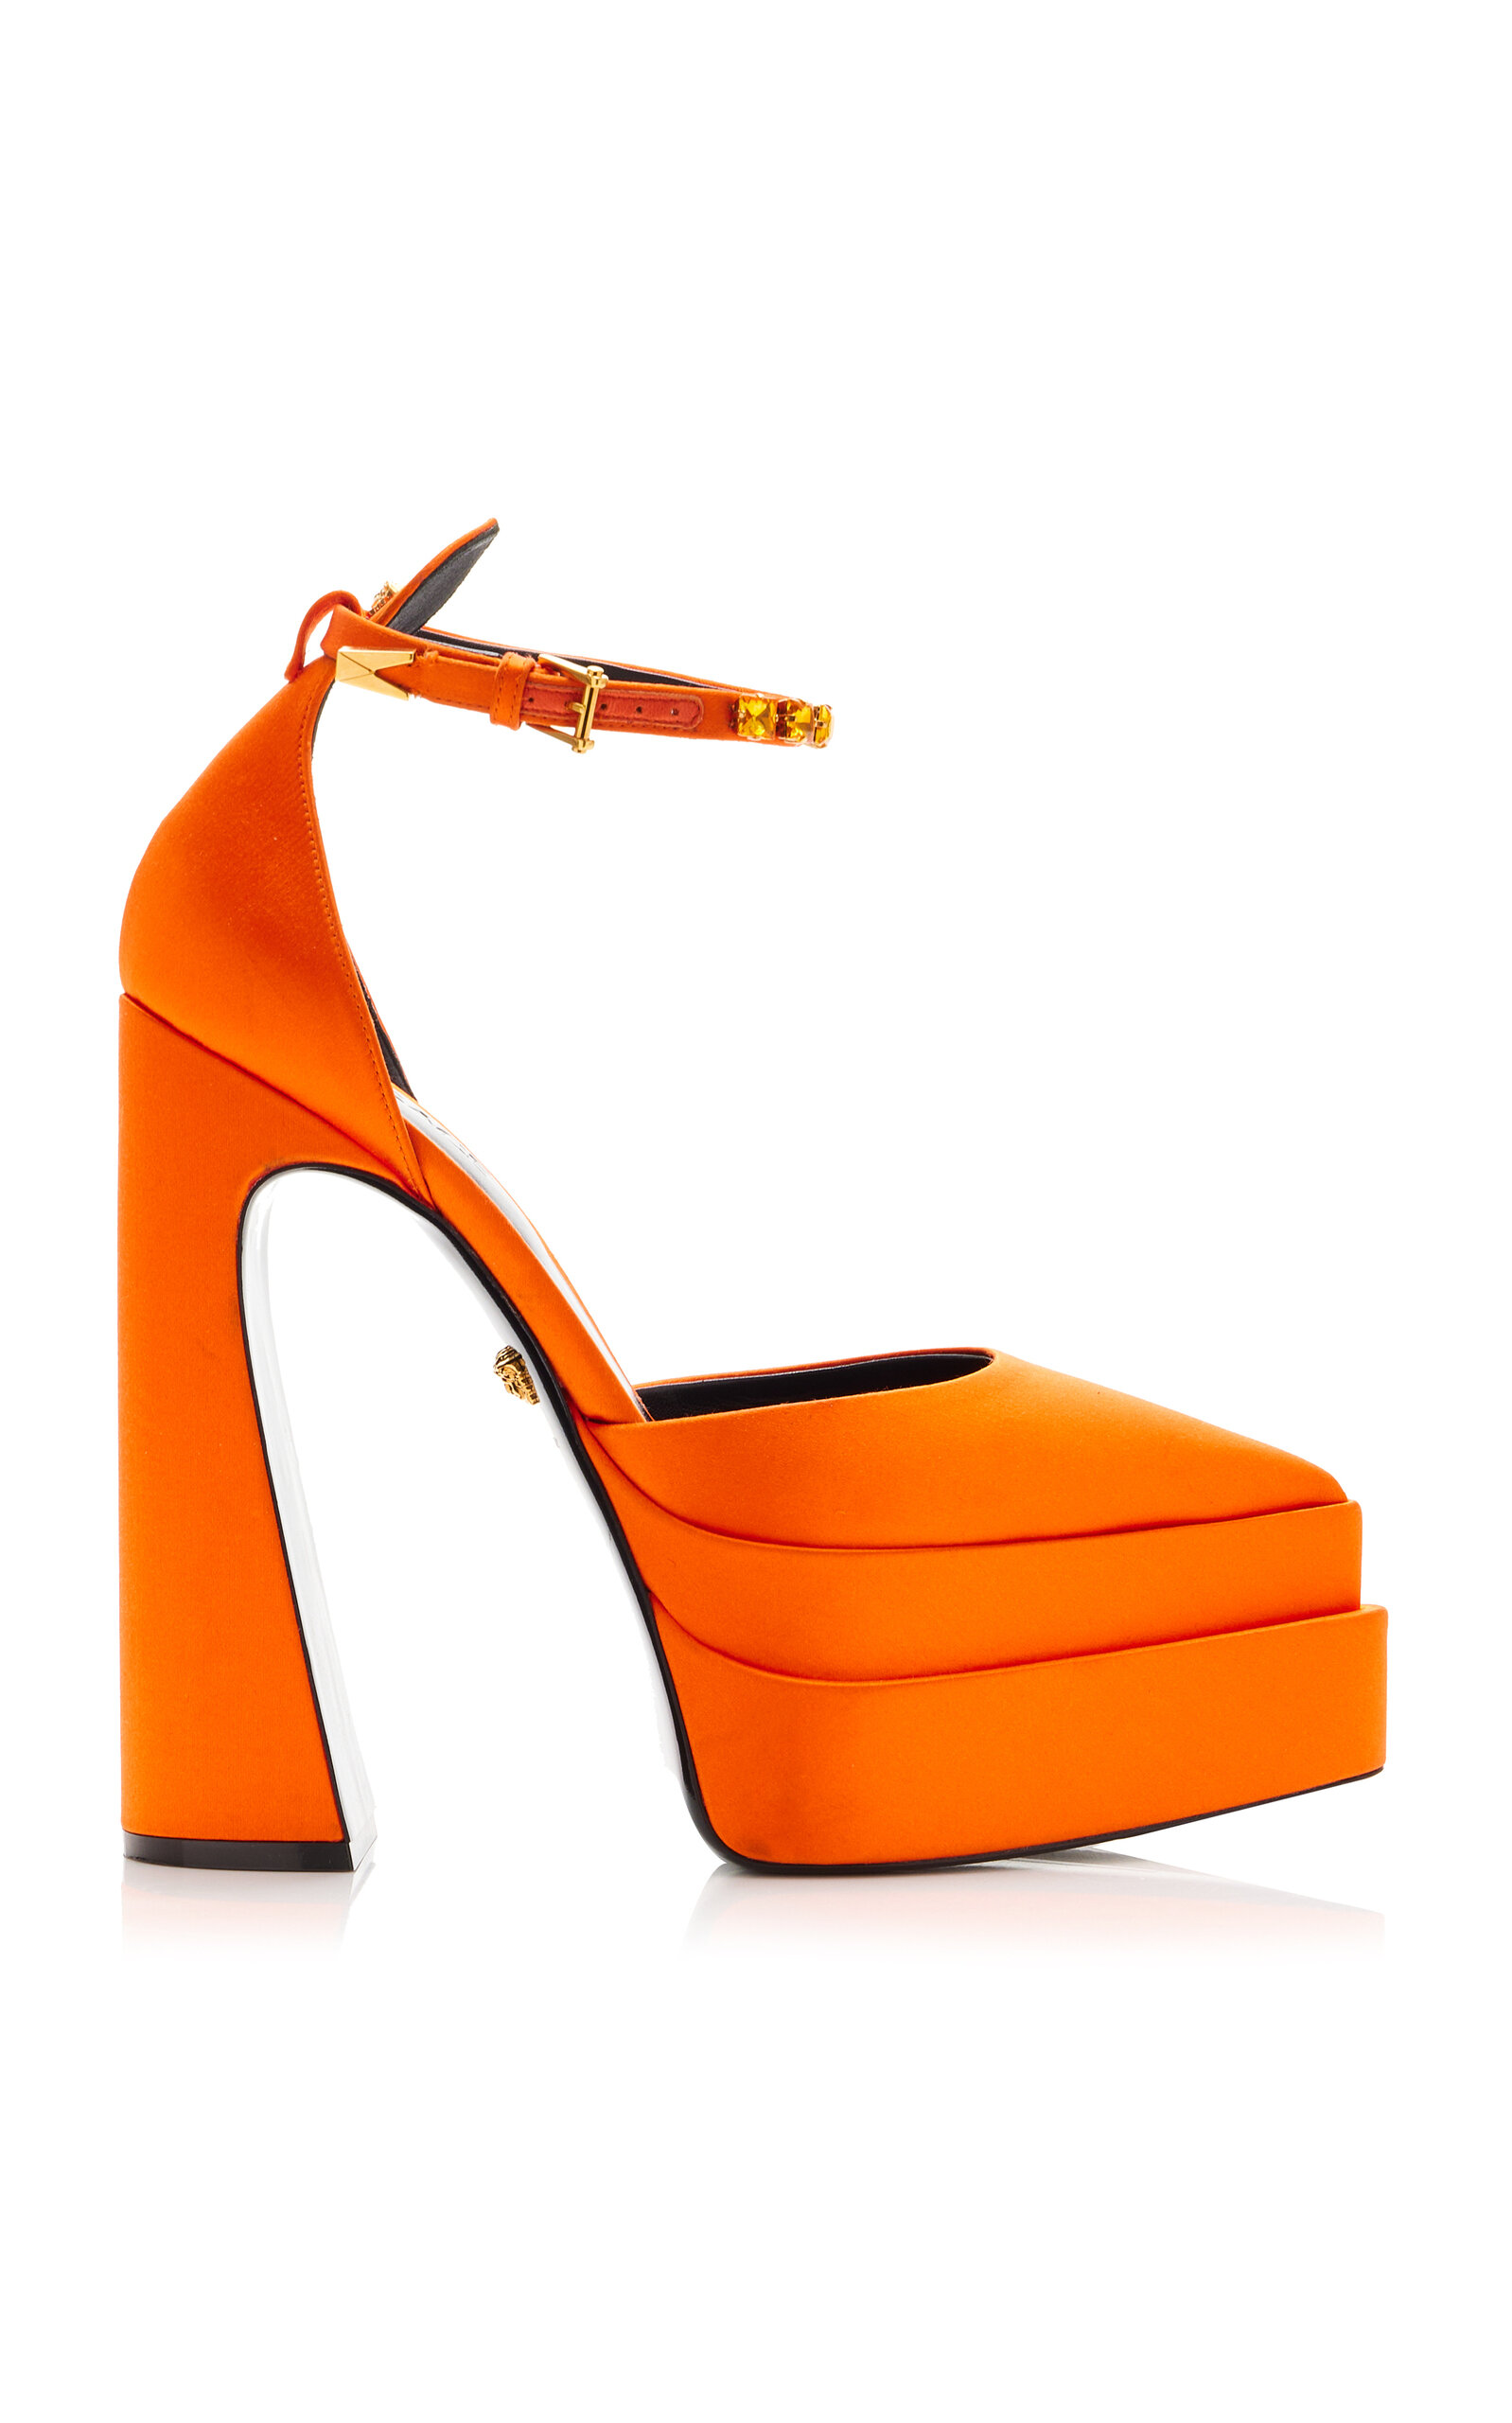 Versace - Women's Crystal-Embellished Satin Platform Pumps - Orange - IT 36 - Moda Operandi